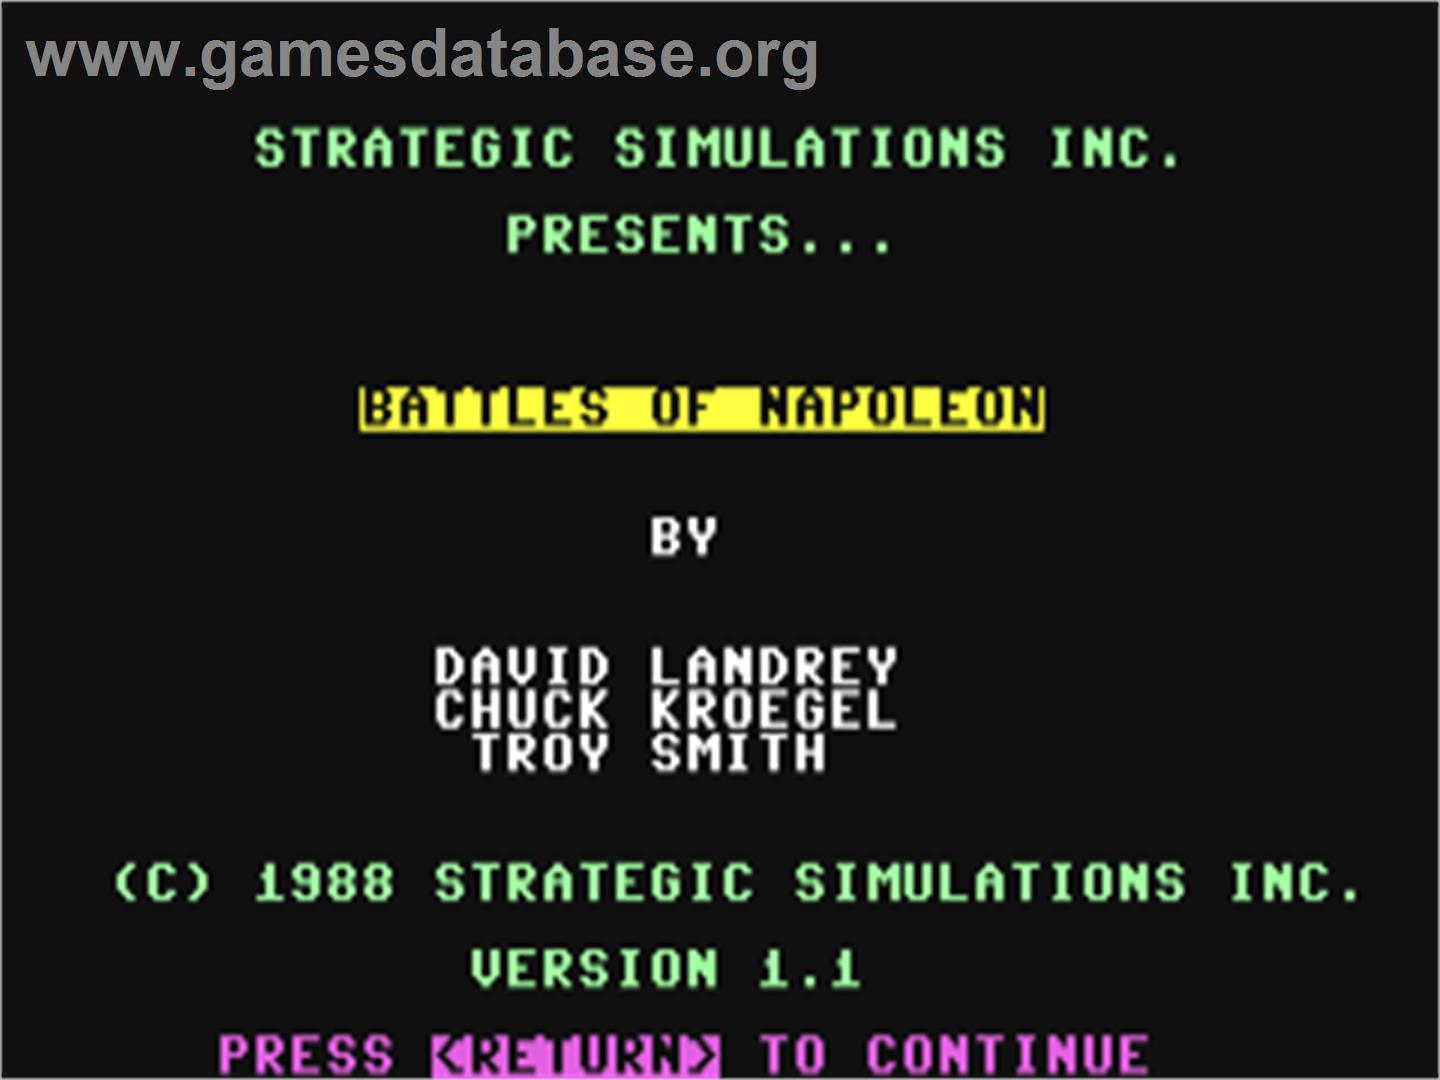 Battles of Napoleon - Commodore 64 - Artwork - Title Screen